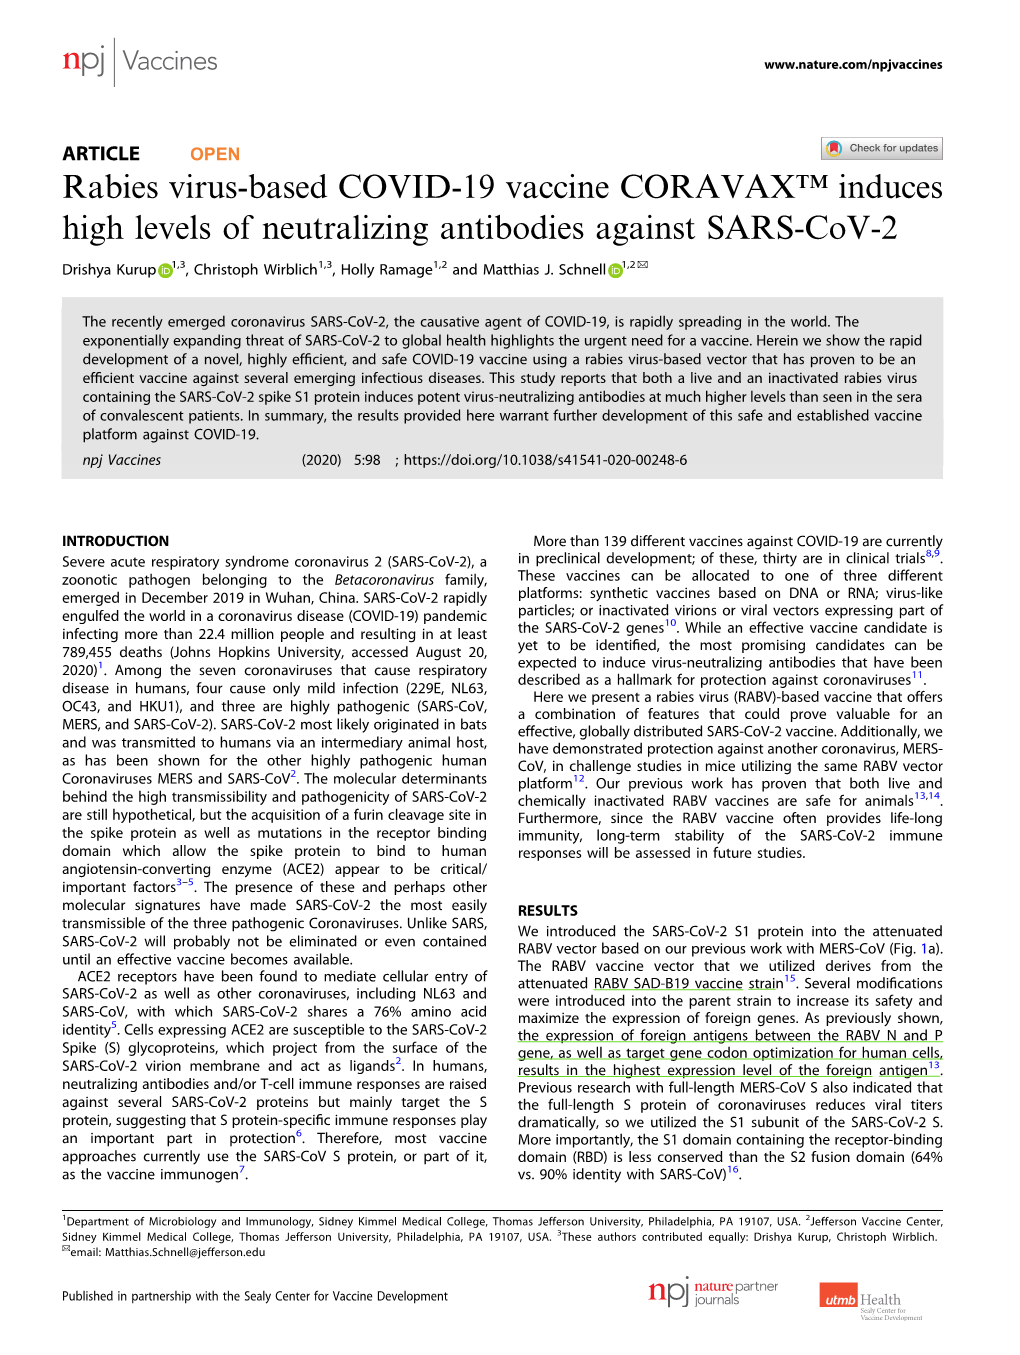 Rabies Virus-Based COVID-19 Vaccine CORAVAX™ Induces High